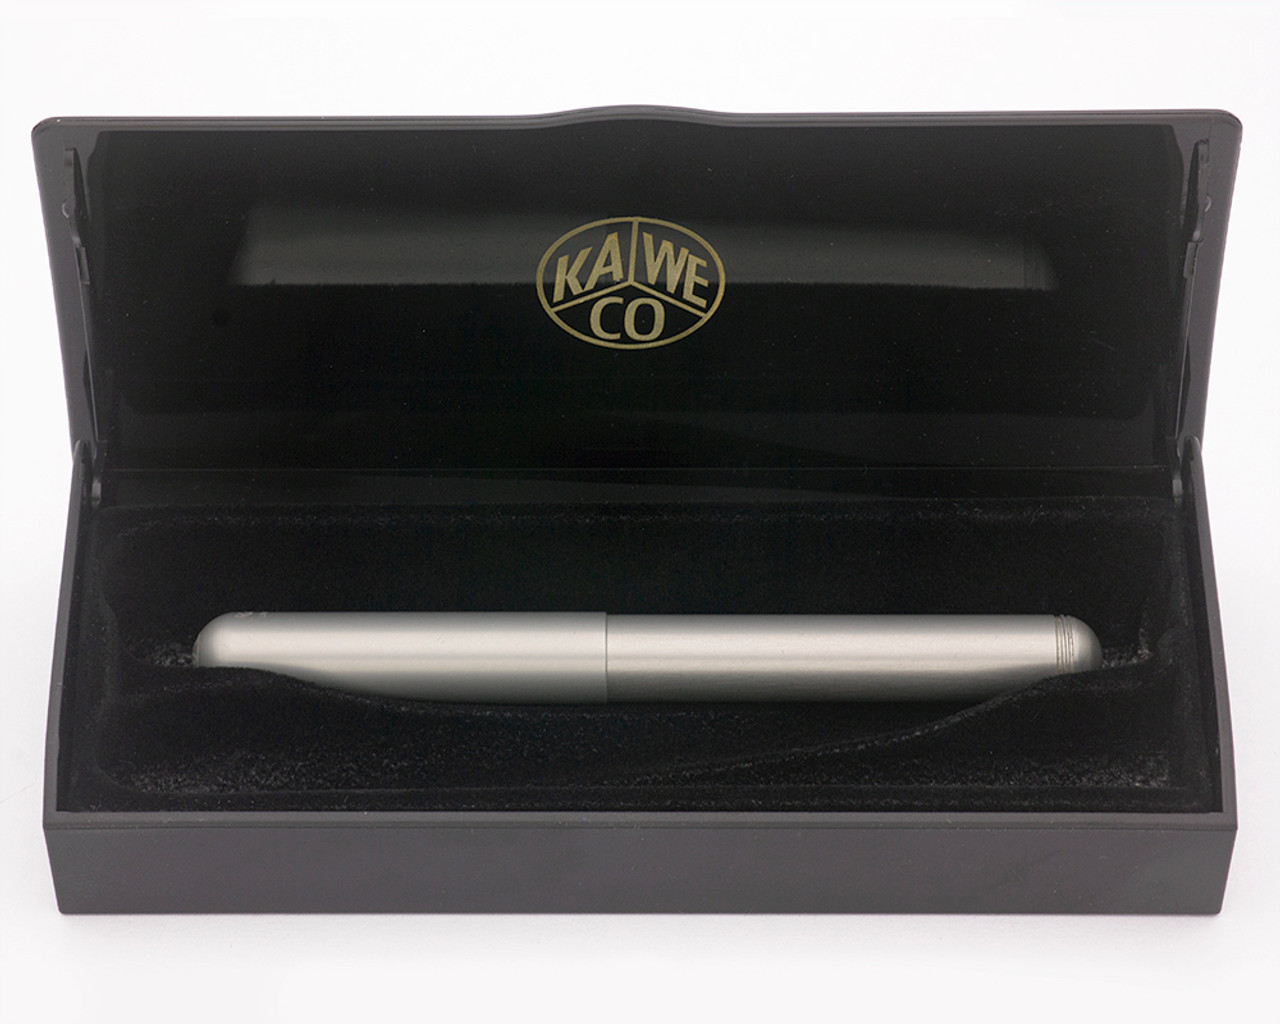 Kaweco Liliput Fountain Pen - Stainless Steel, C/C,  Fine Steel Nib (New in Box, Works Well)